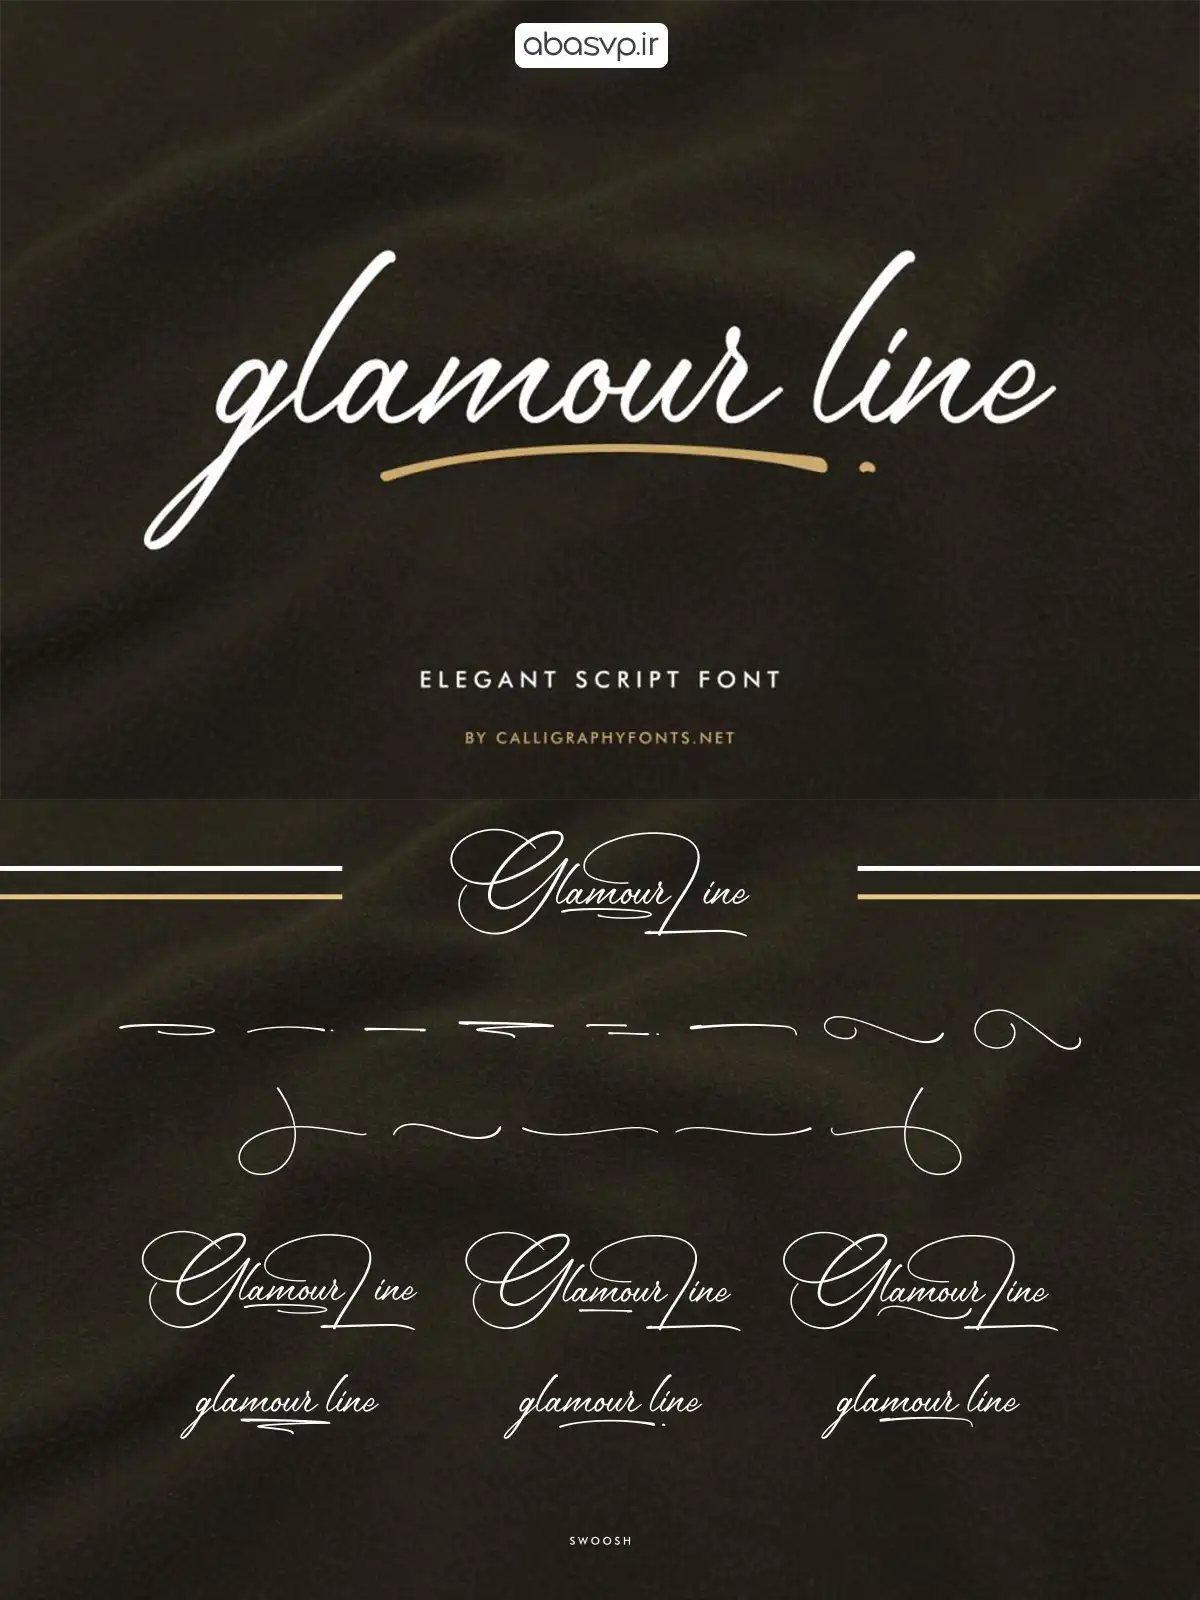 دانلود فونت انگلیسی تحریری Glamour Line